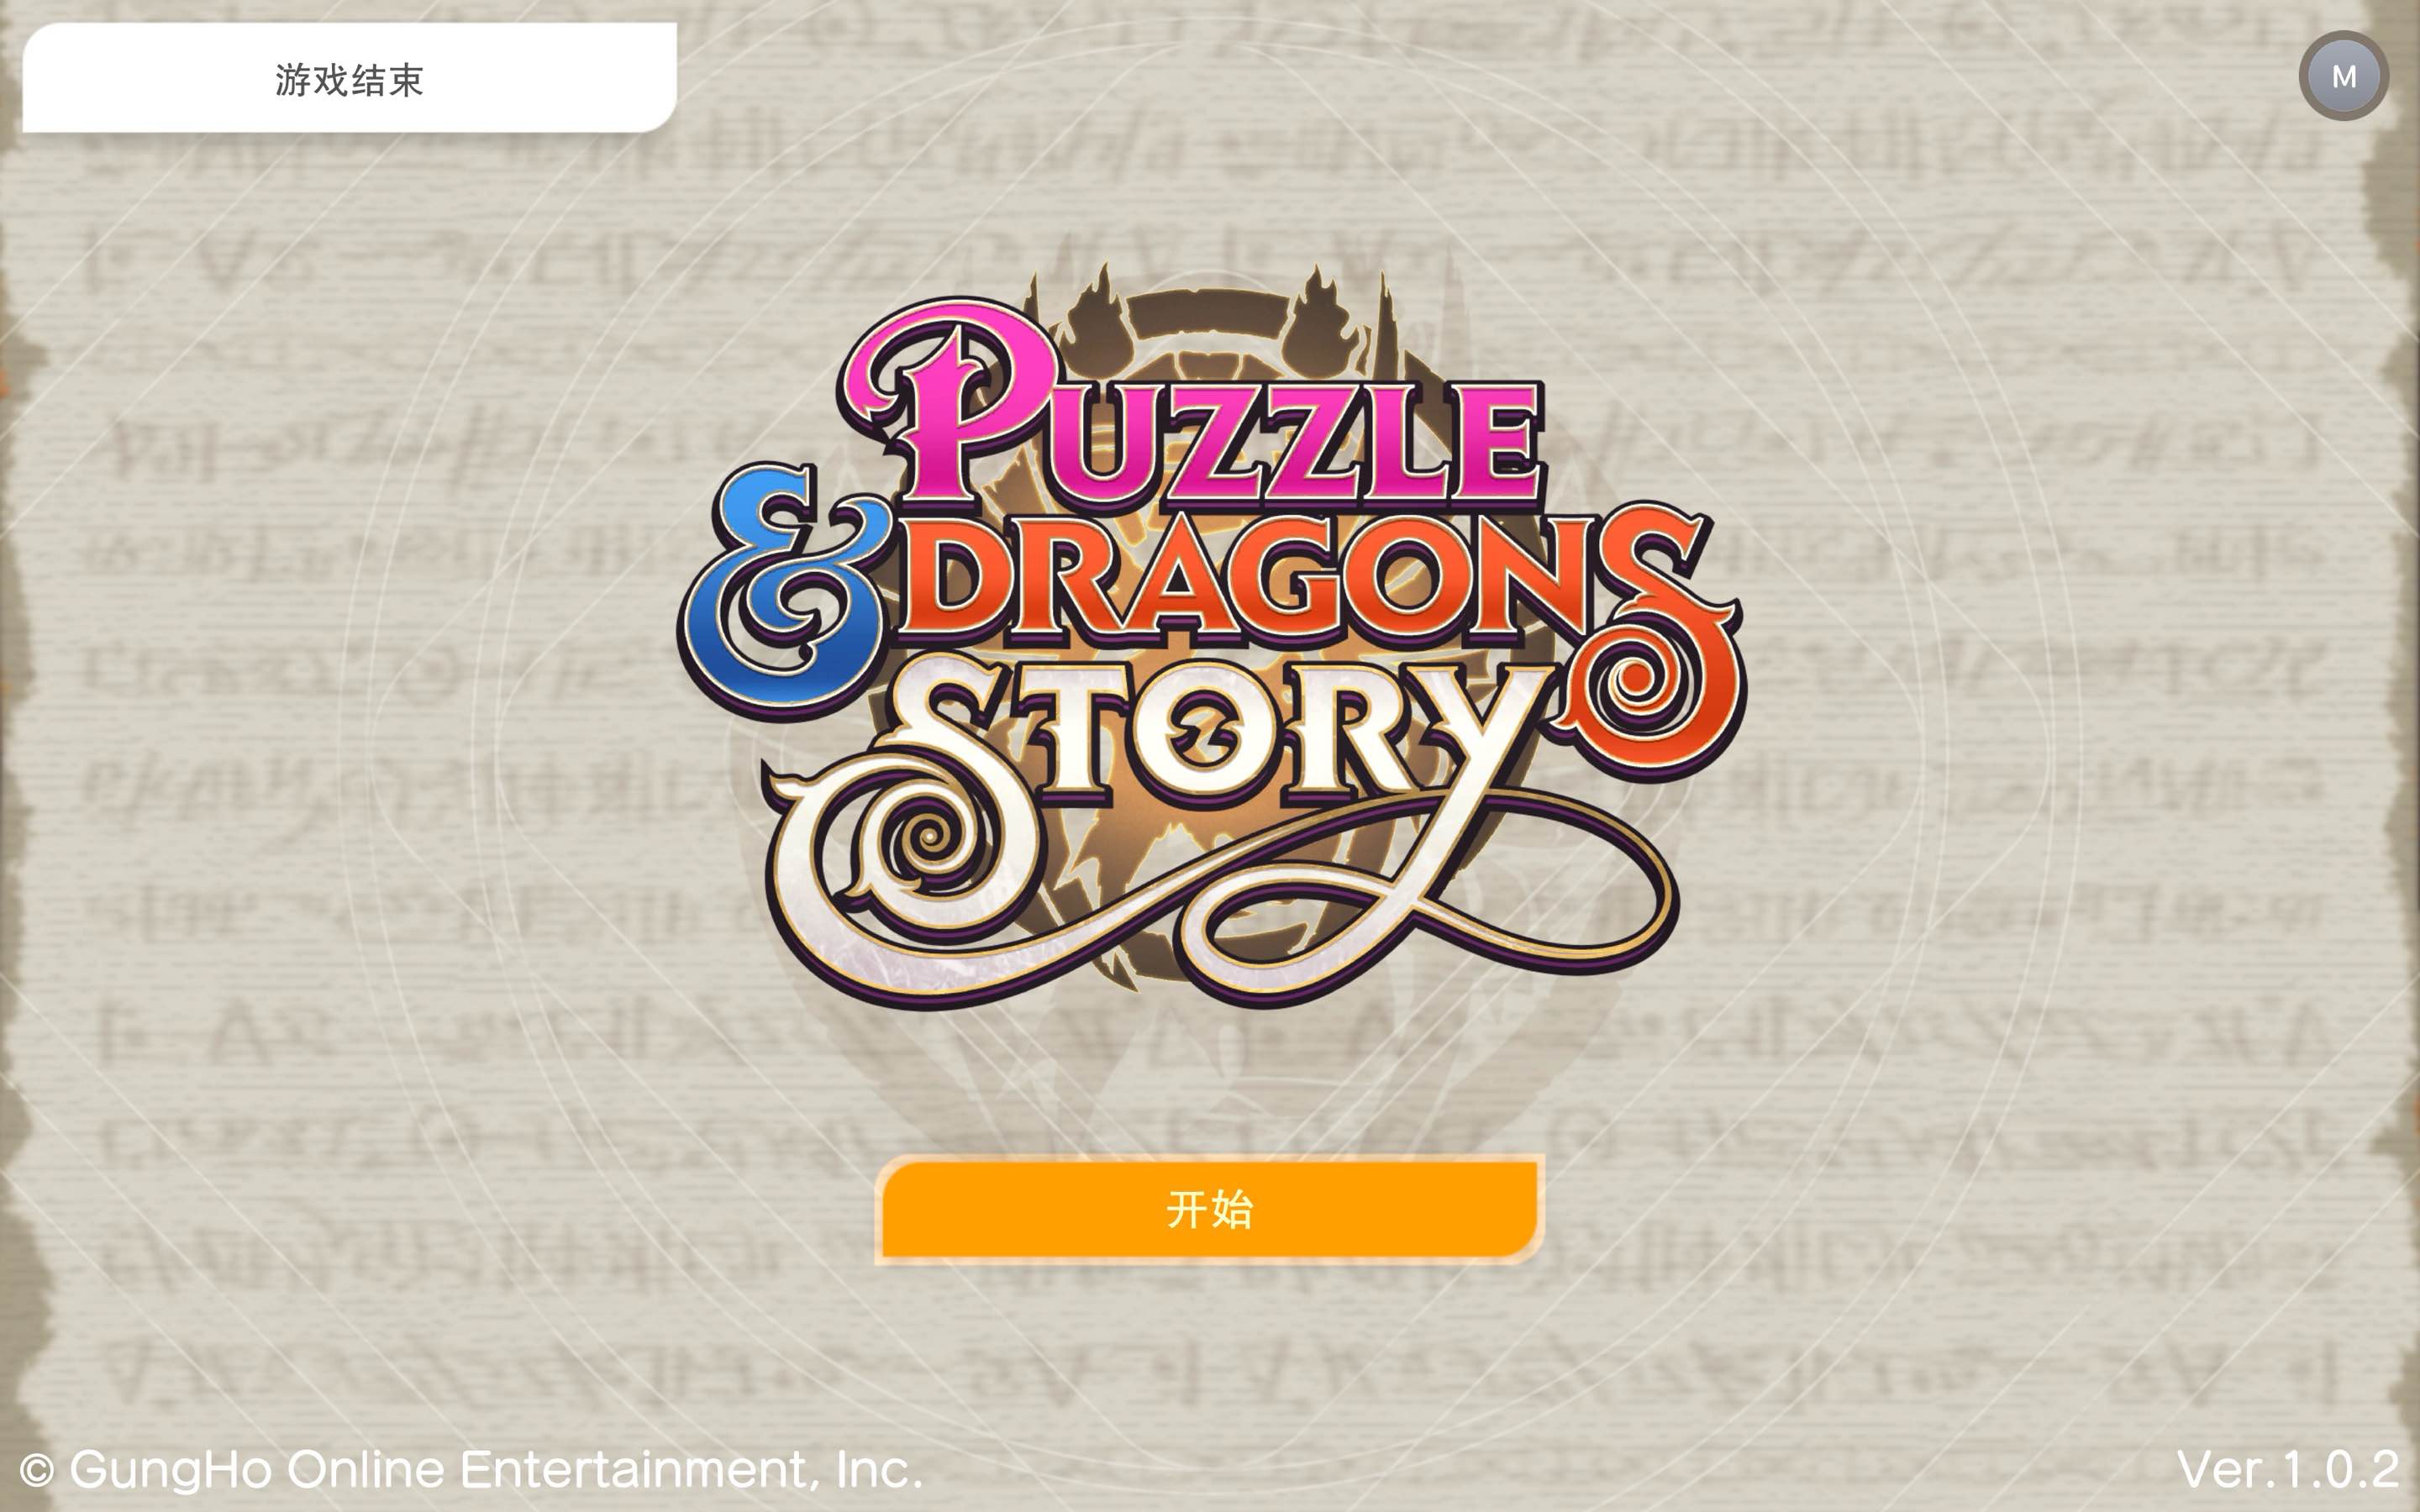 智龙迷城物语 for Mac Puzzle & Dragons Story v1.3.0 中文原生版 苹果电脑